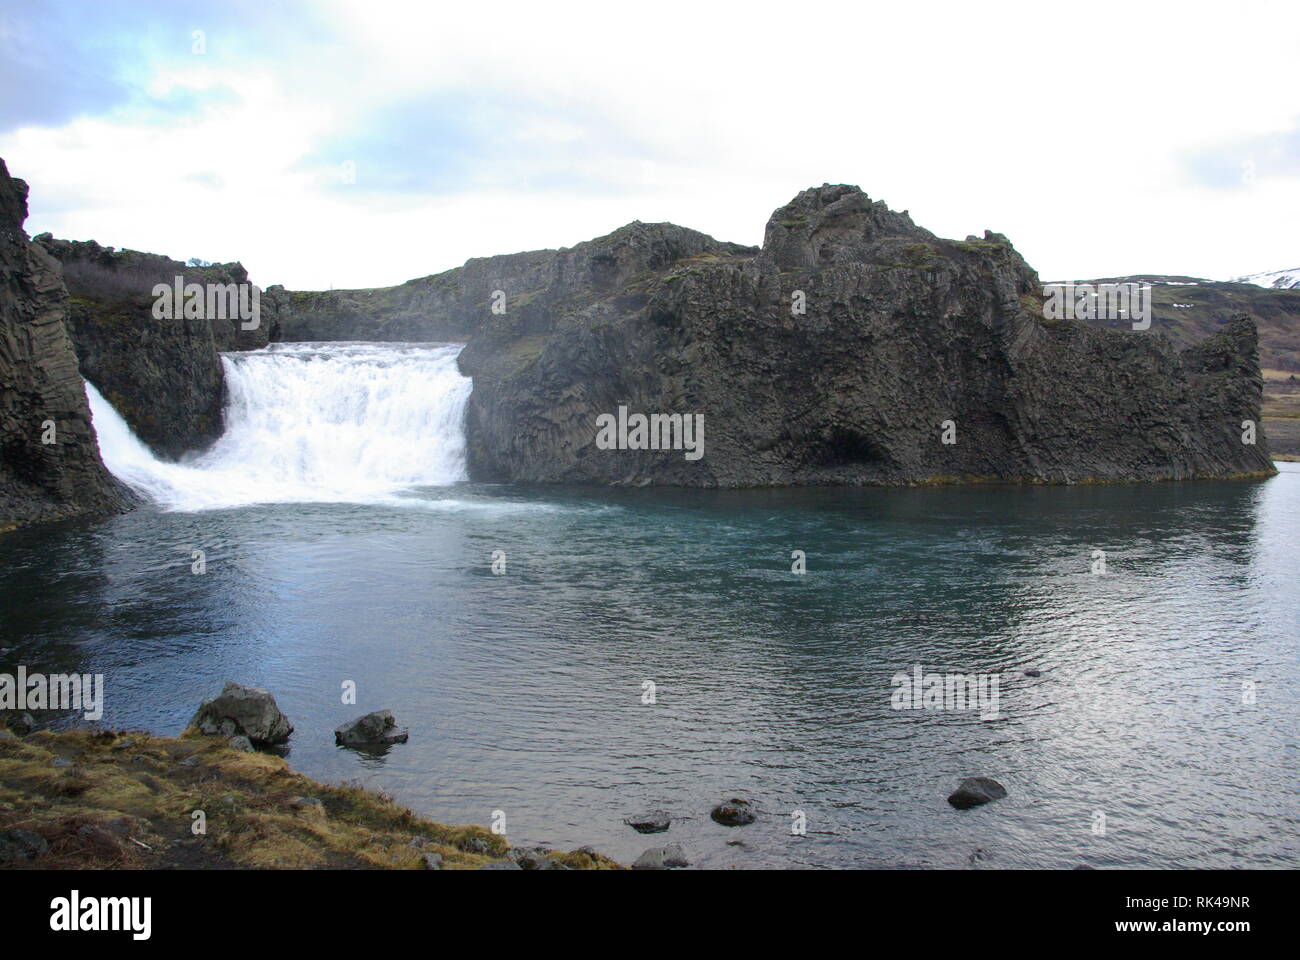 Doppelter Wasserfall Hjalparfoss auf Island Foto Stock